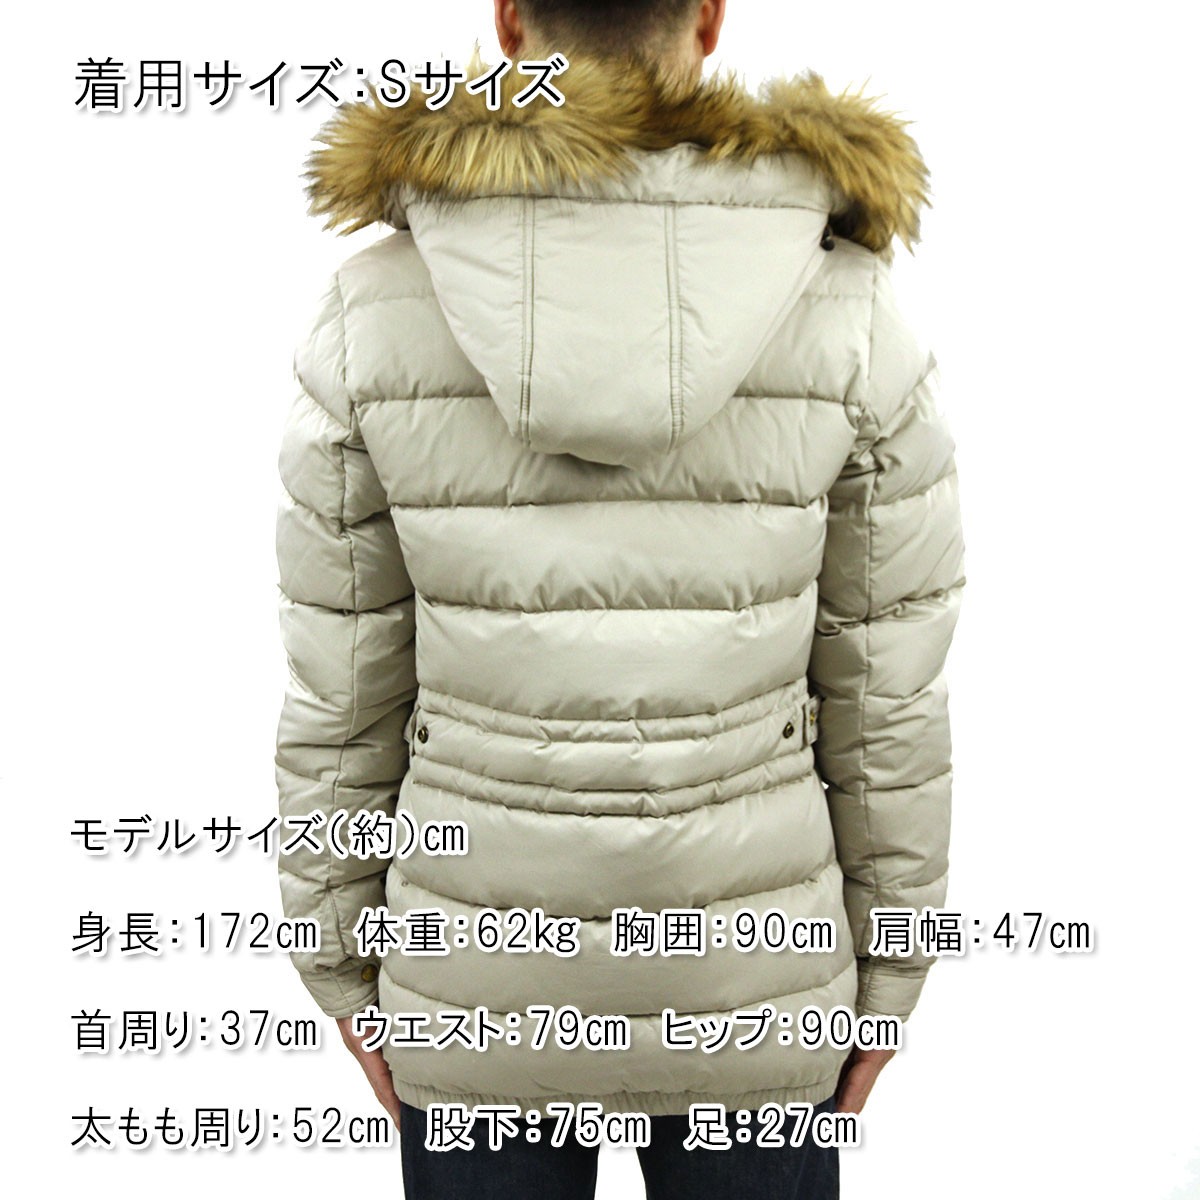 åɥ SCOTCHSODA  㥱å Long hooded jacket with fake fur at hood edge 10014 08